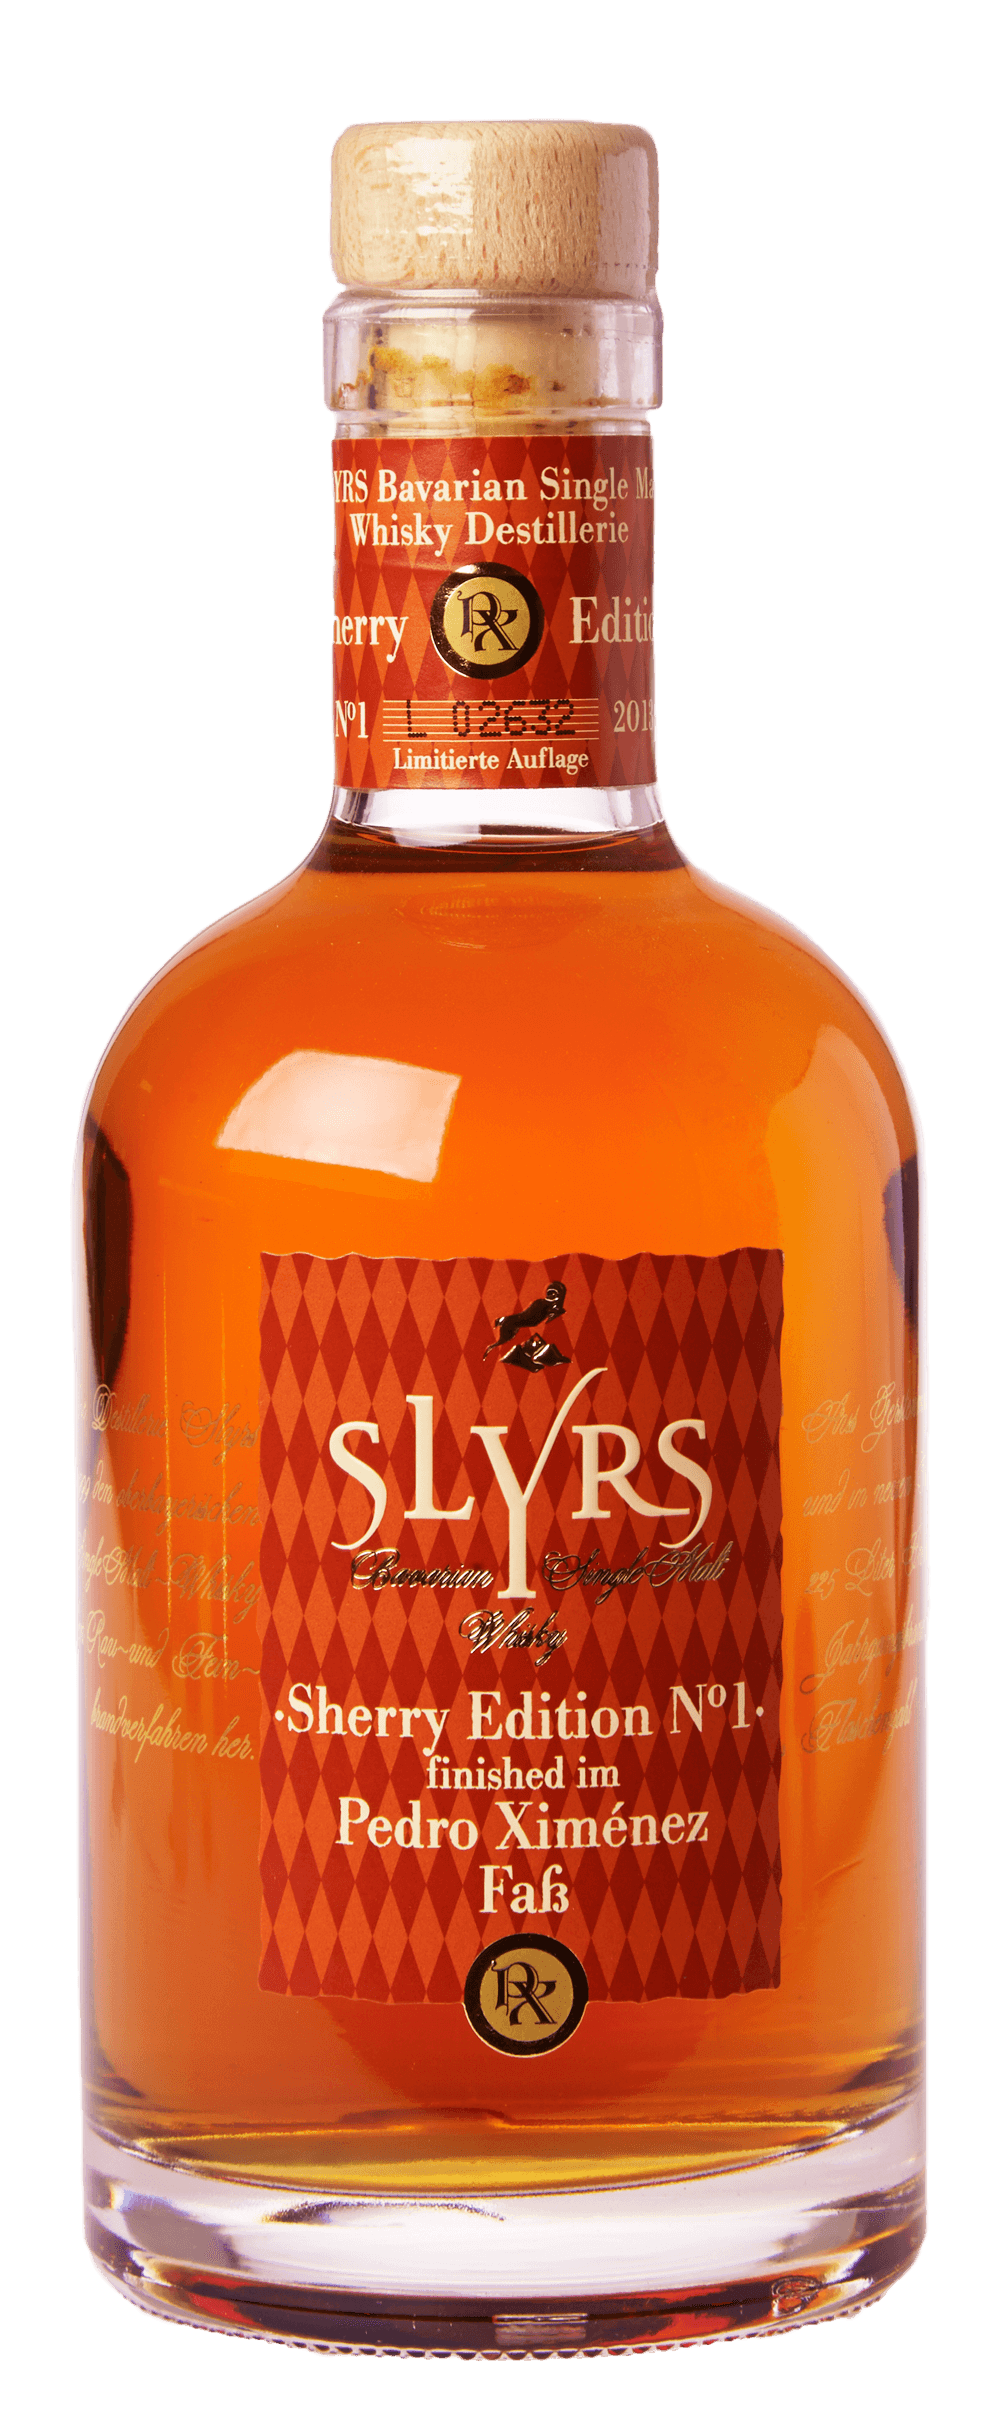 Slyrs Sherry Edition No.1 Pedro Ximenez 46% 0,35L